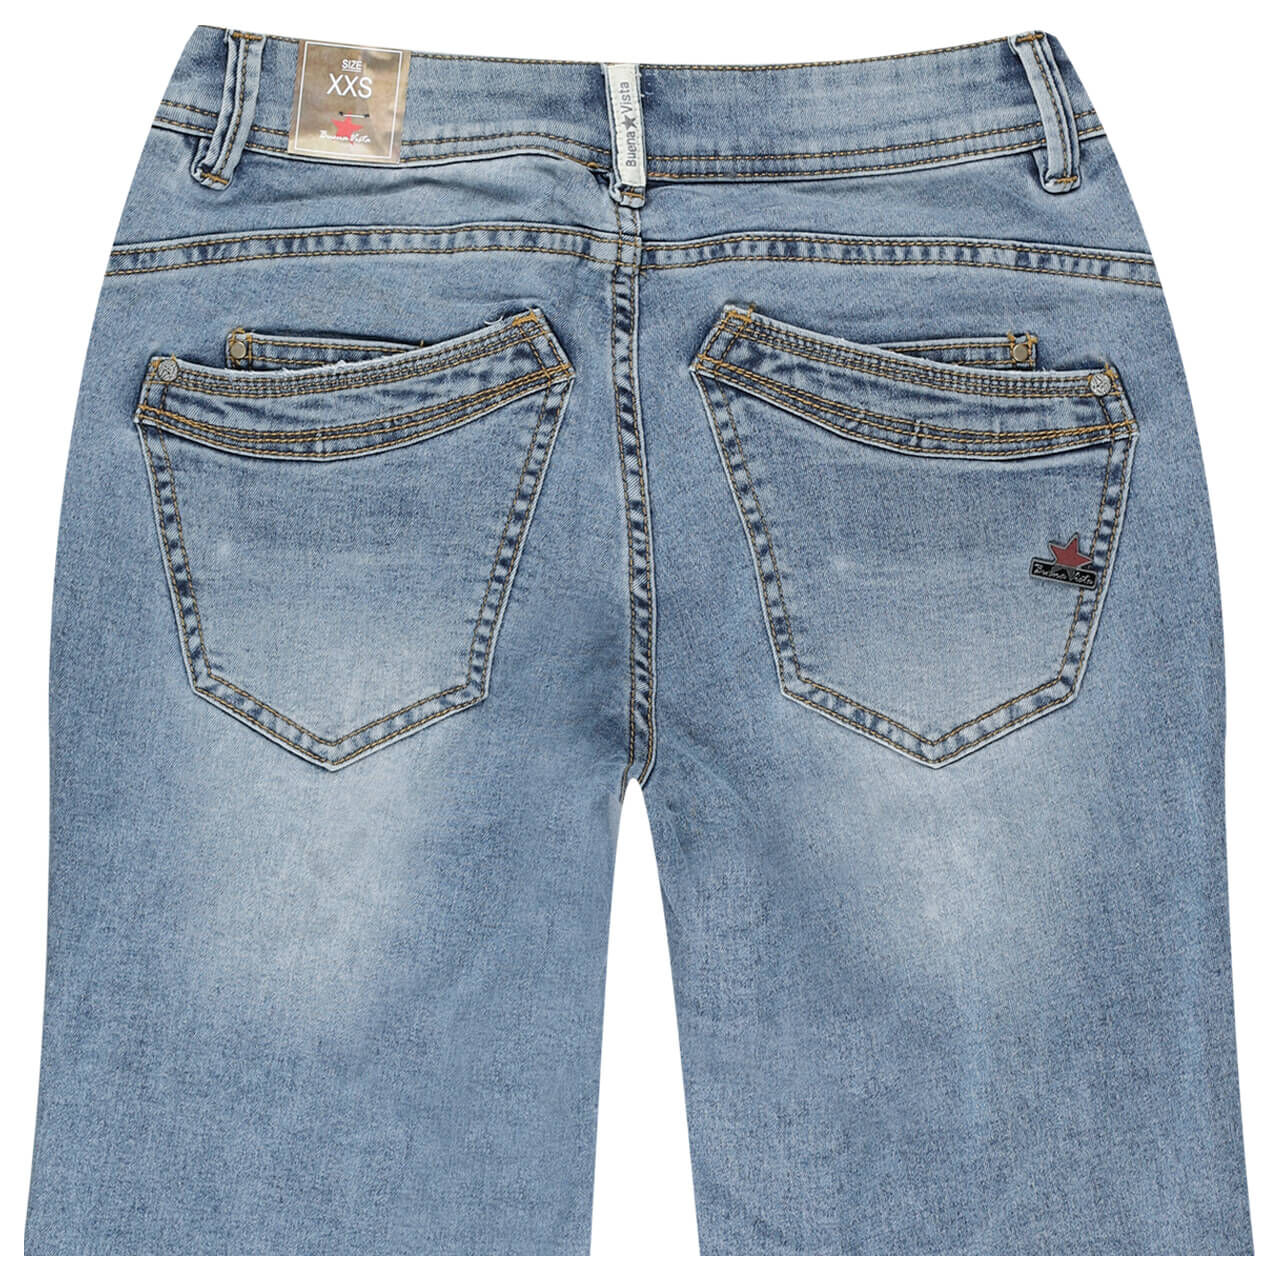 Buena Vista Malibu-Short Stretch Denim Jeans light stone blue